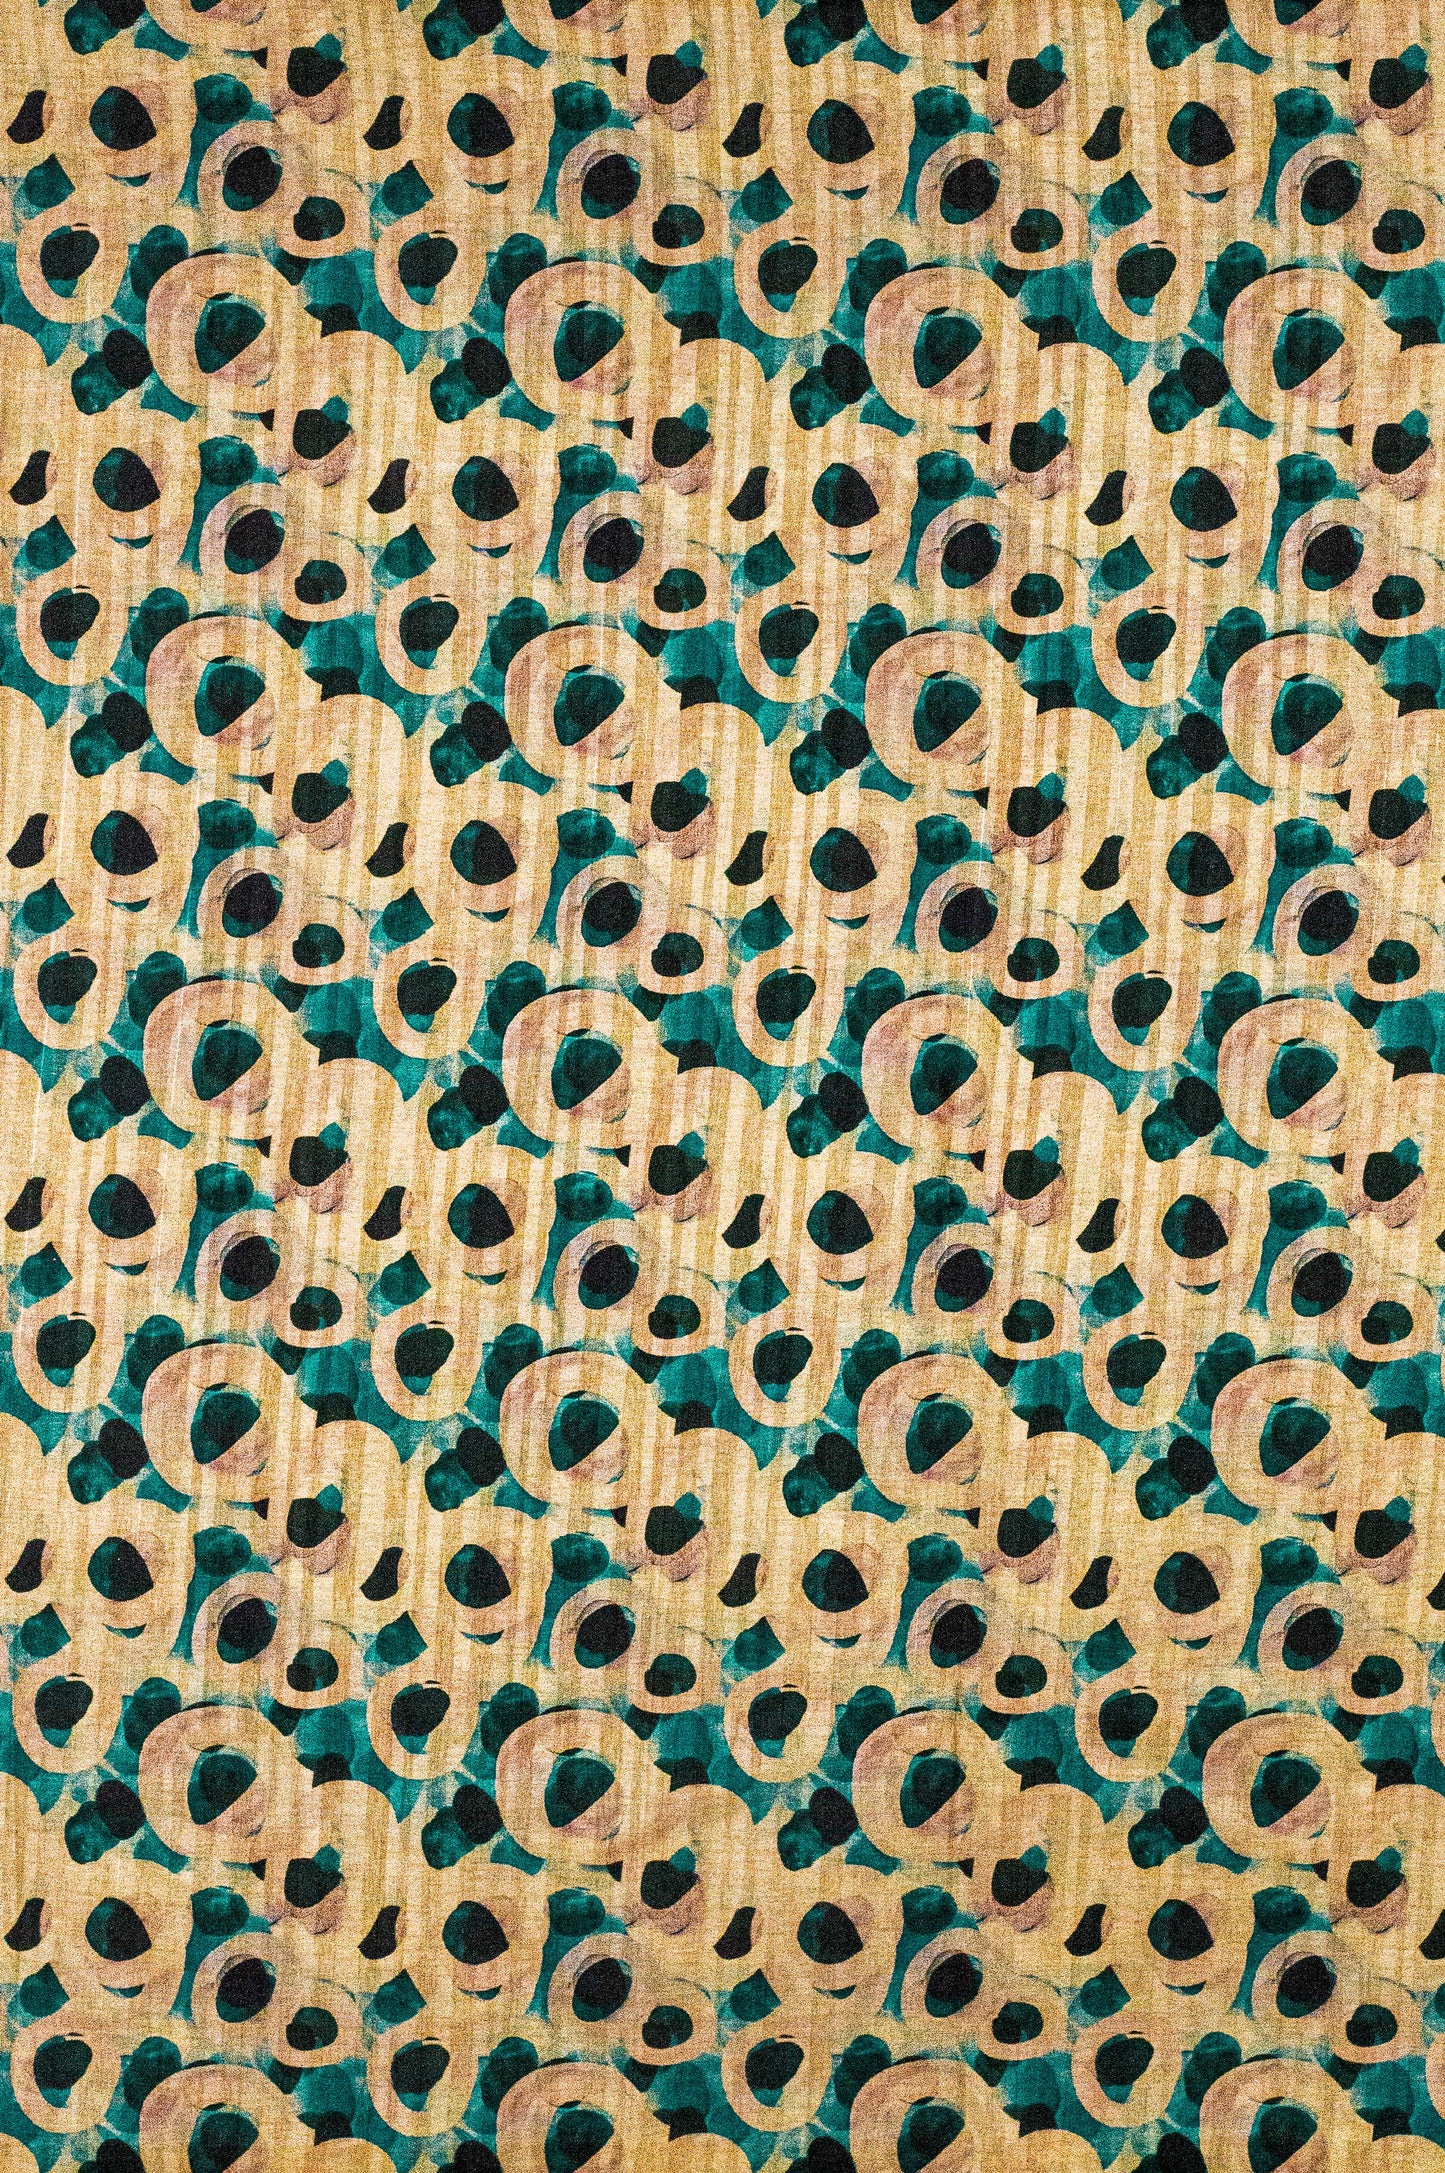 Immitation Raw Silk Abstract Green Fabric